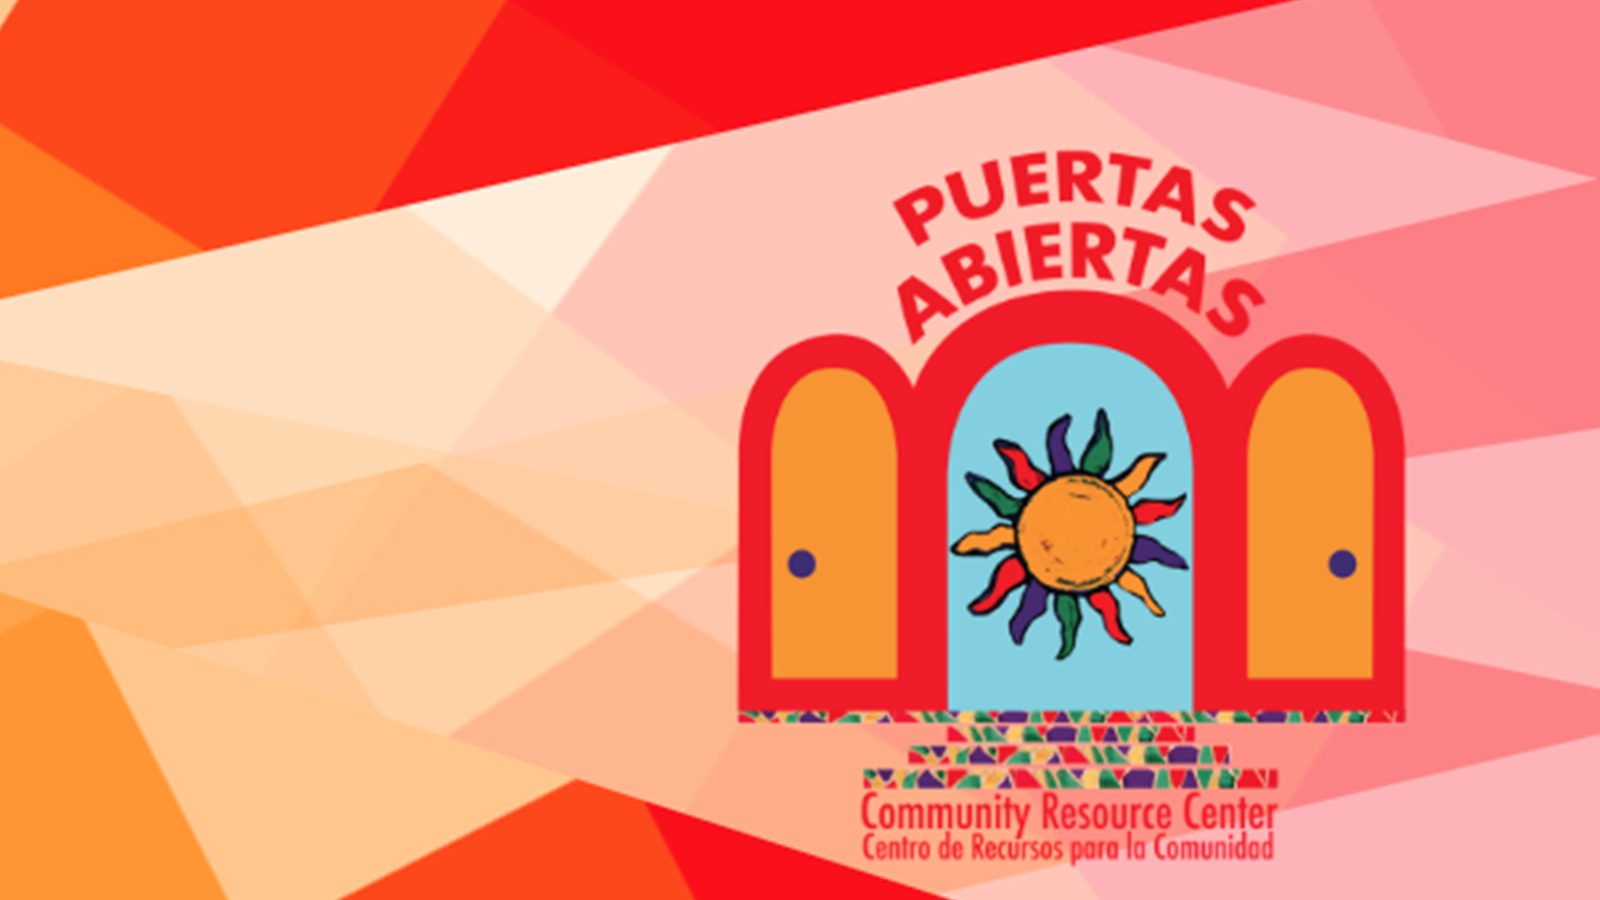 Puertas Abiertas Community Resource Center logo.